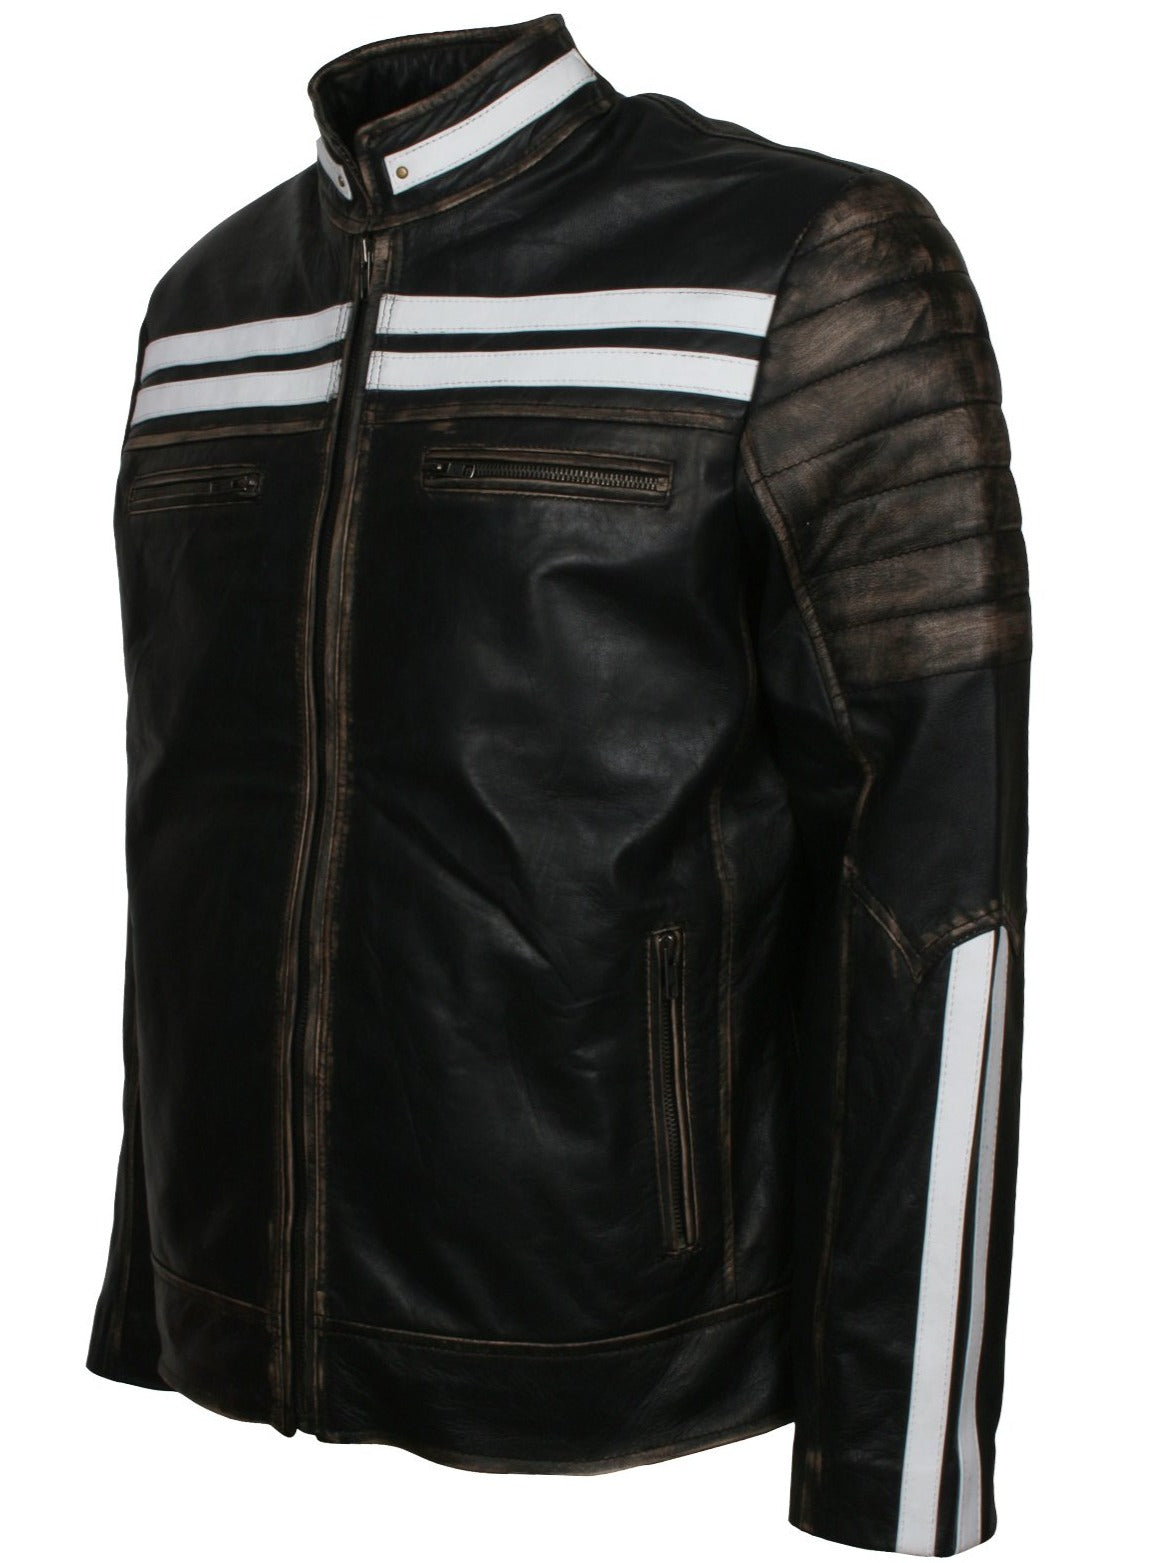 Black Leather Jacket with White Stripes